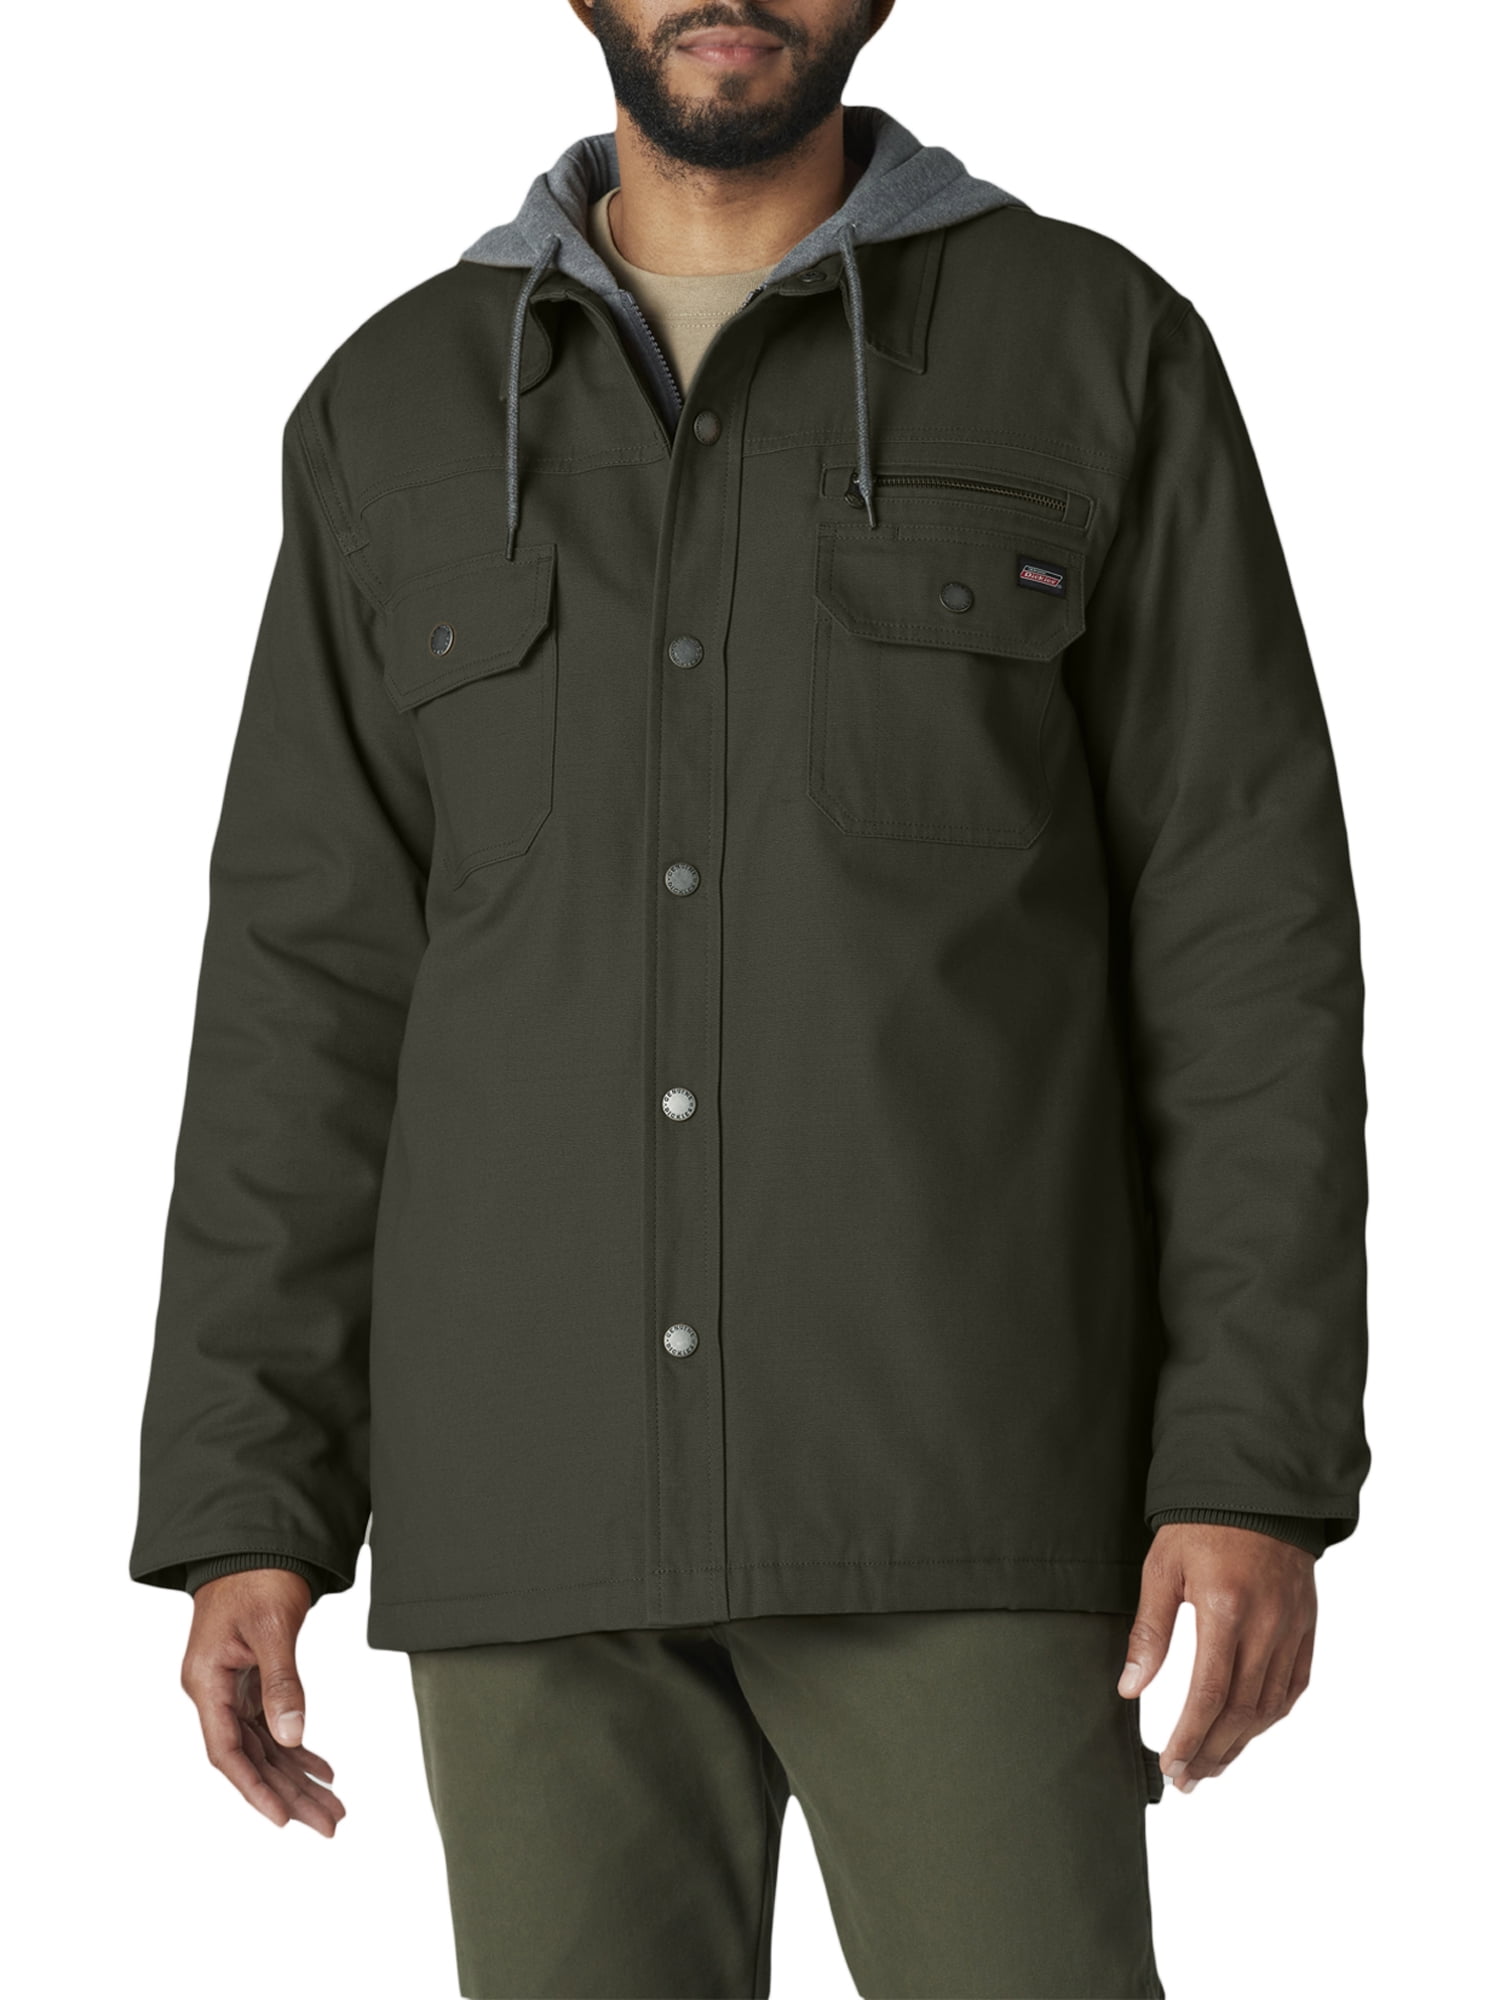 Zuletzt Entsprechend Bolzen dickies sweatshirt jacket Matrix ...